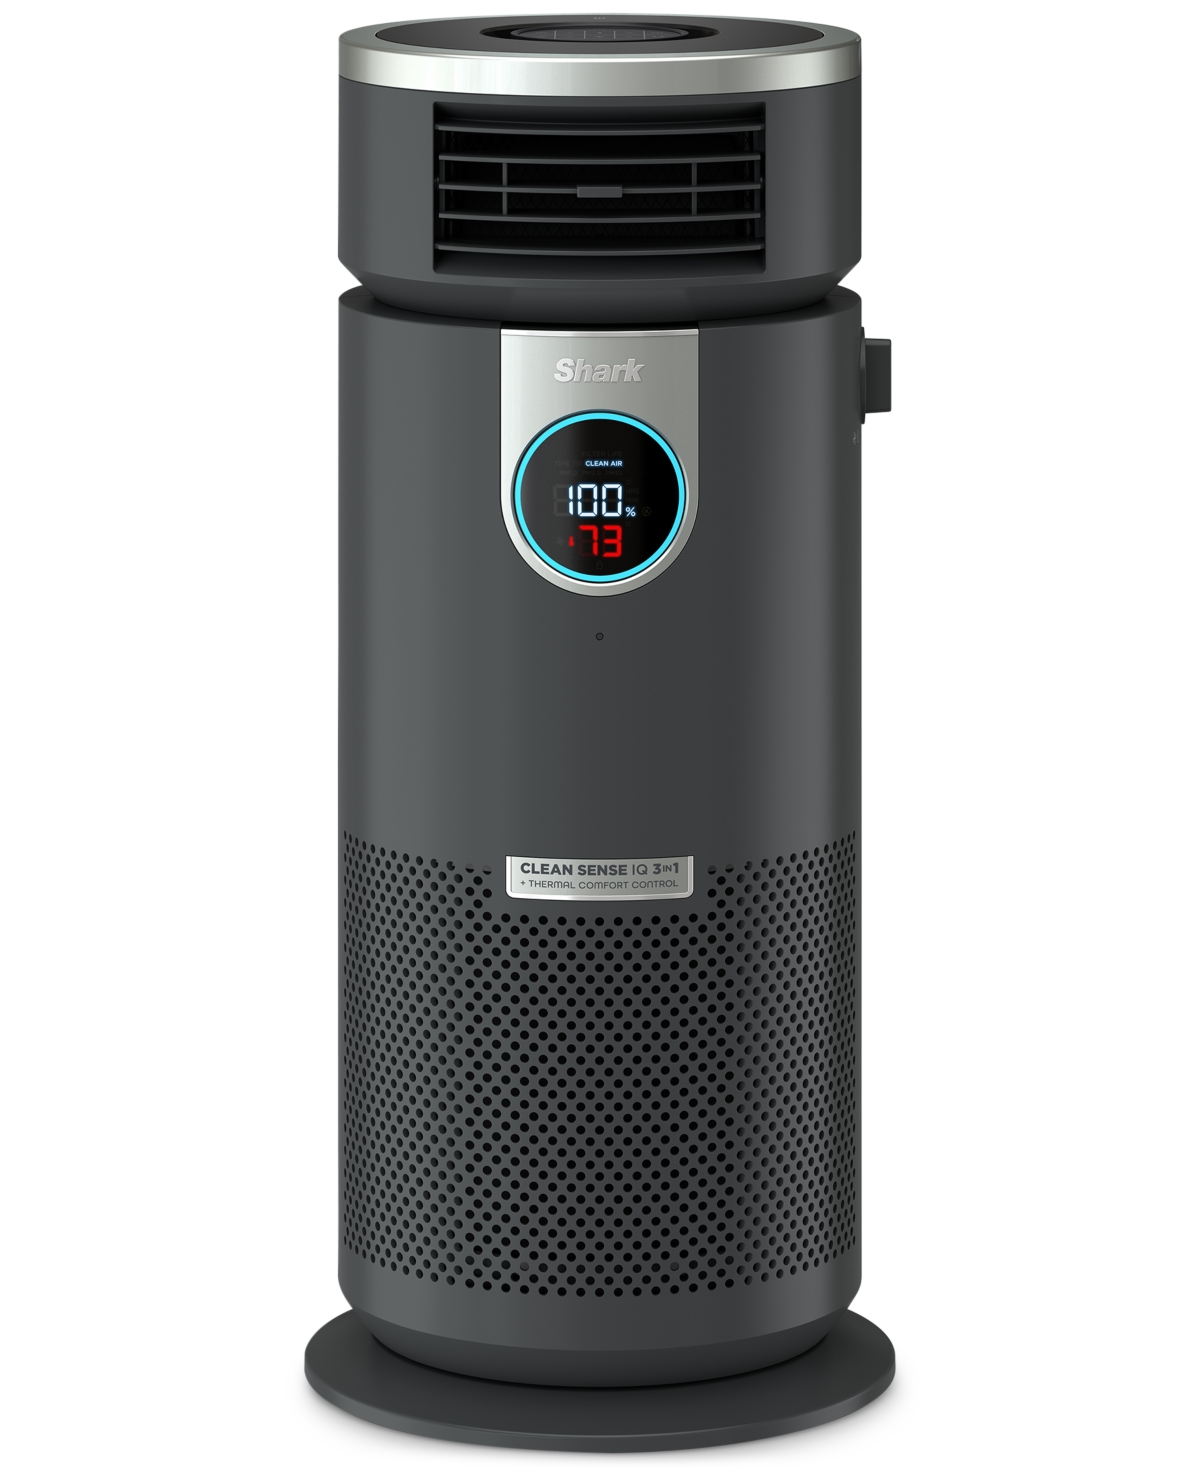 Shark Air Purifier 3-in-1 Hepa Purified Air & Heat Fan In No Color